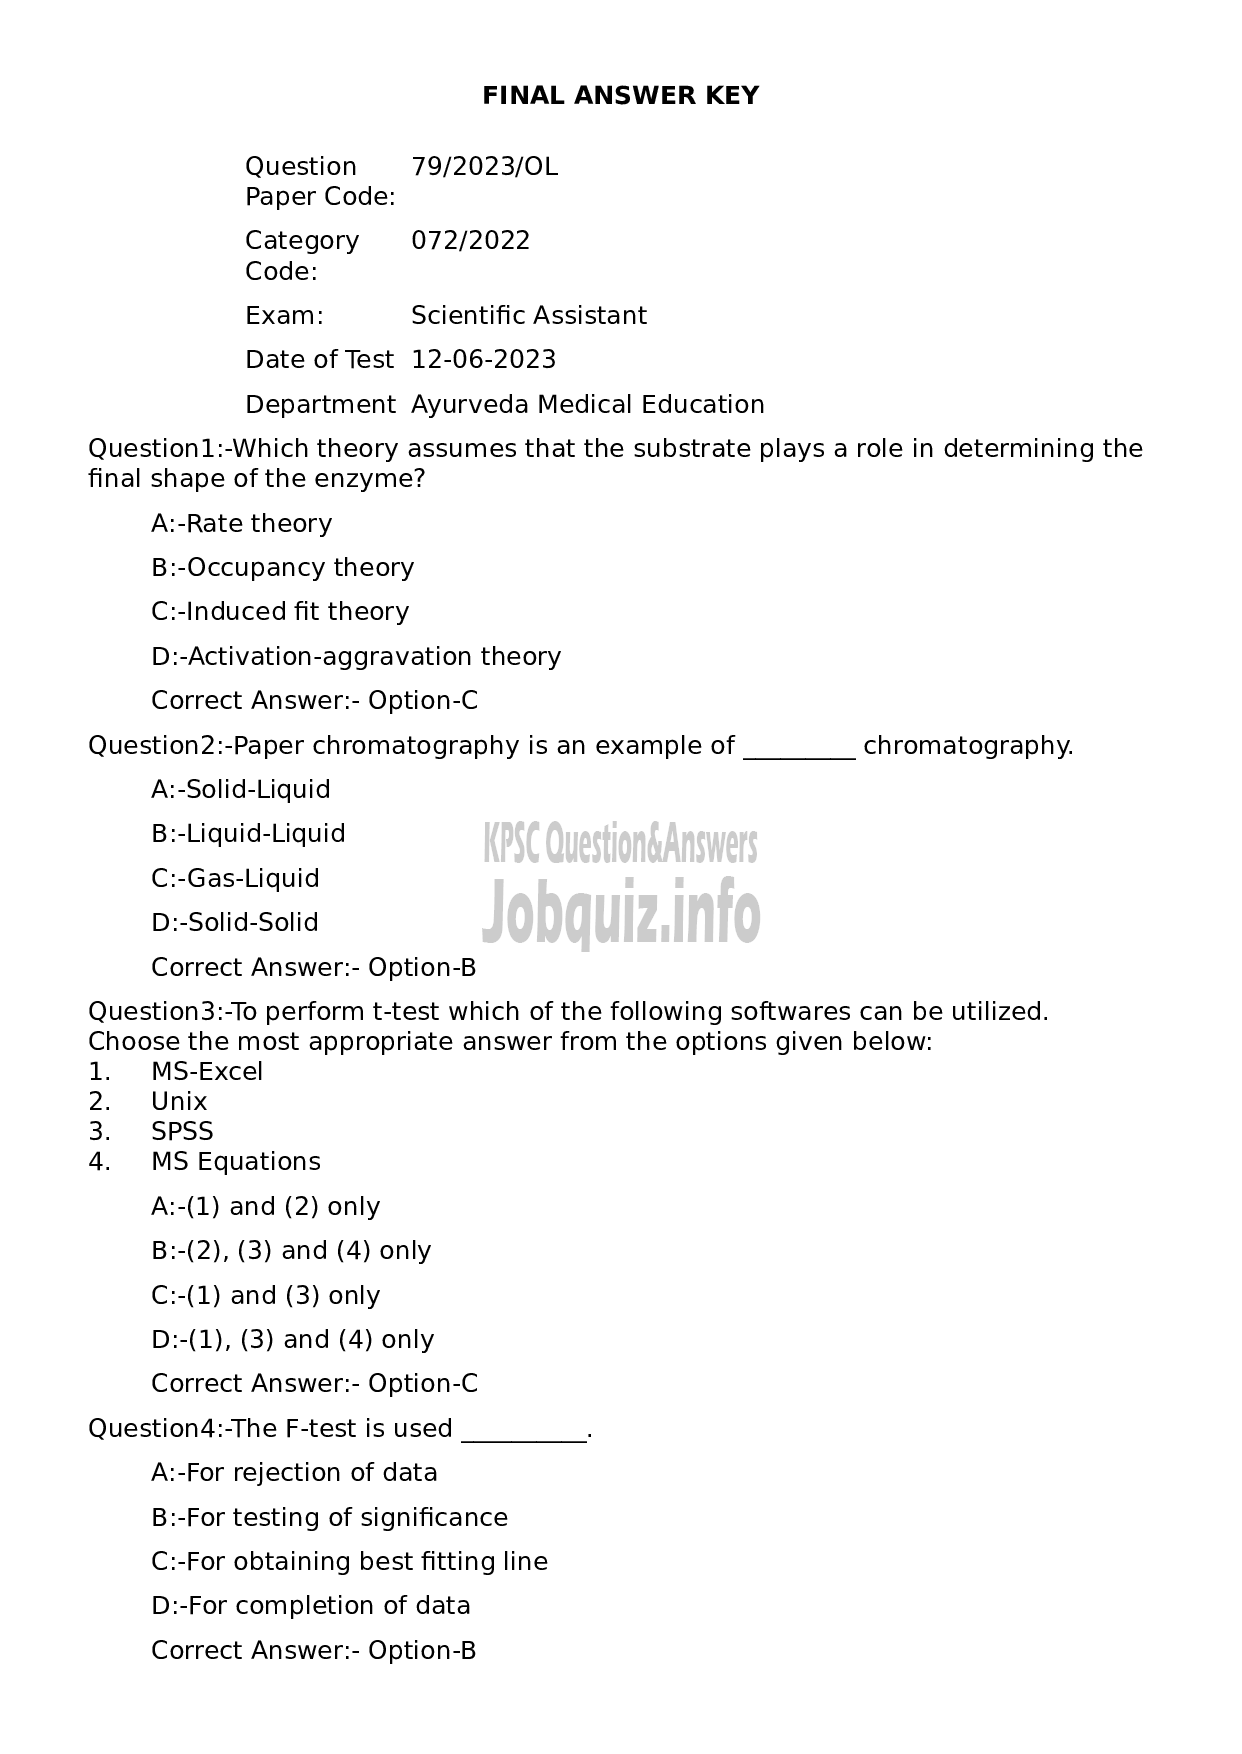 Kerala PSC Question Paper - Scientific Assistant-1